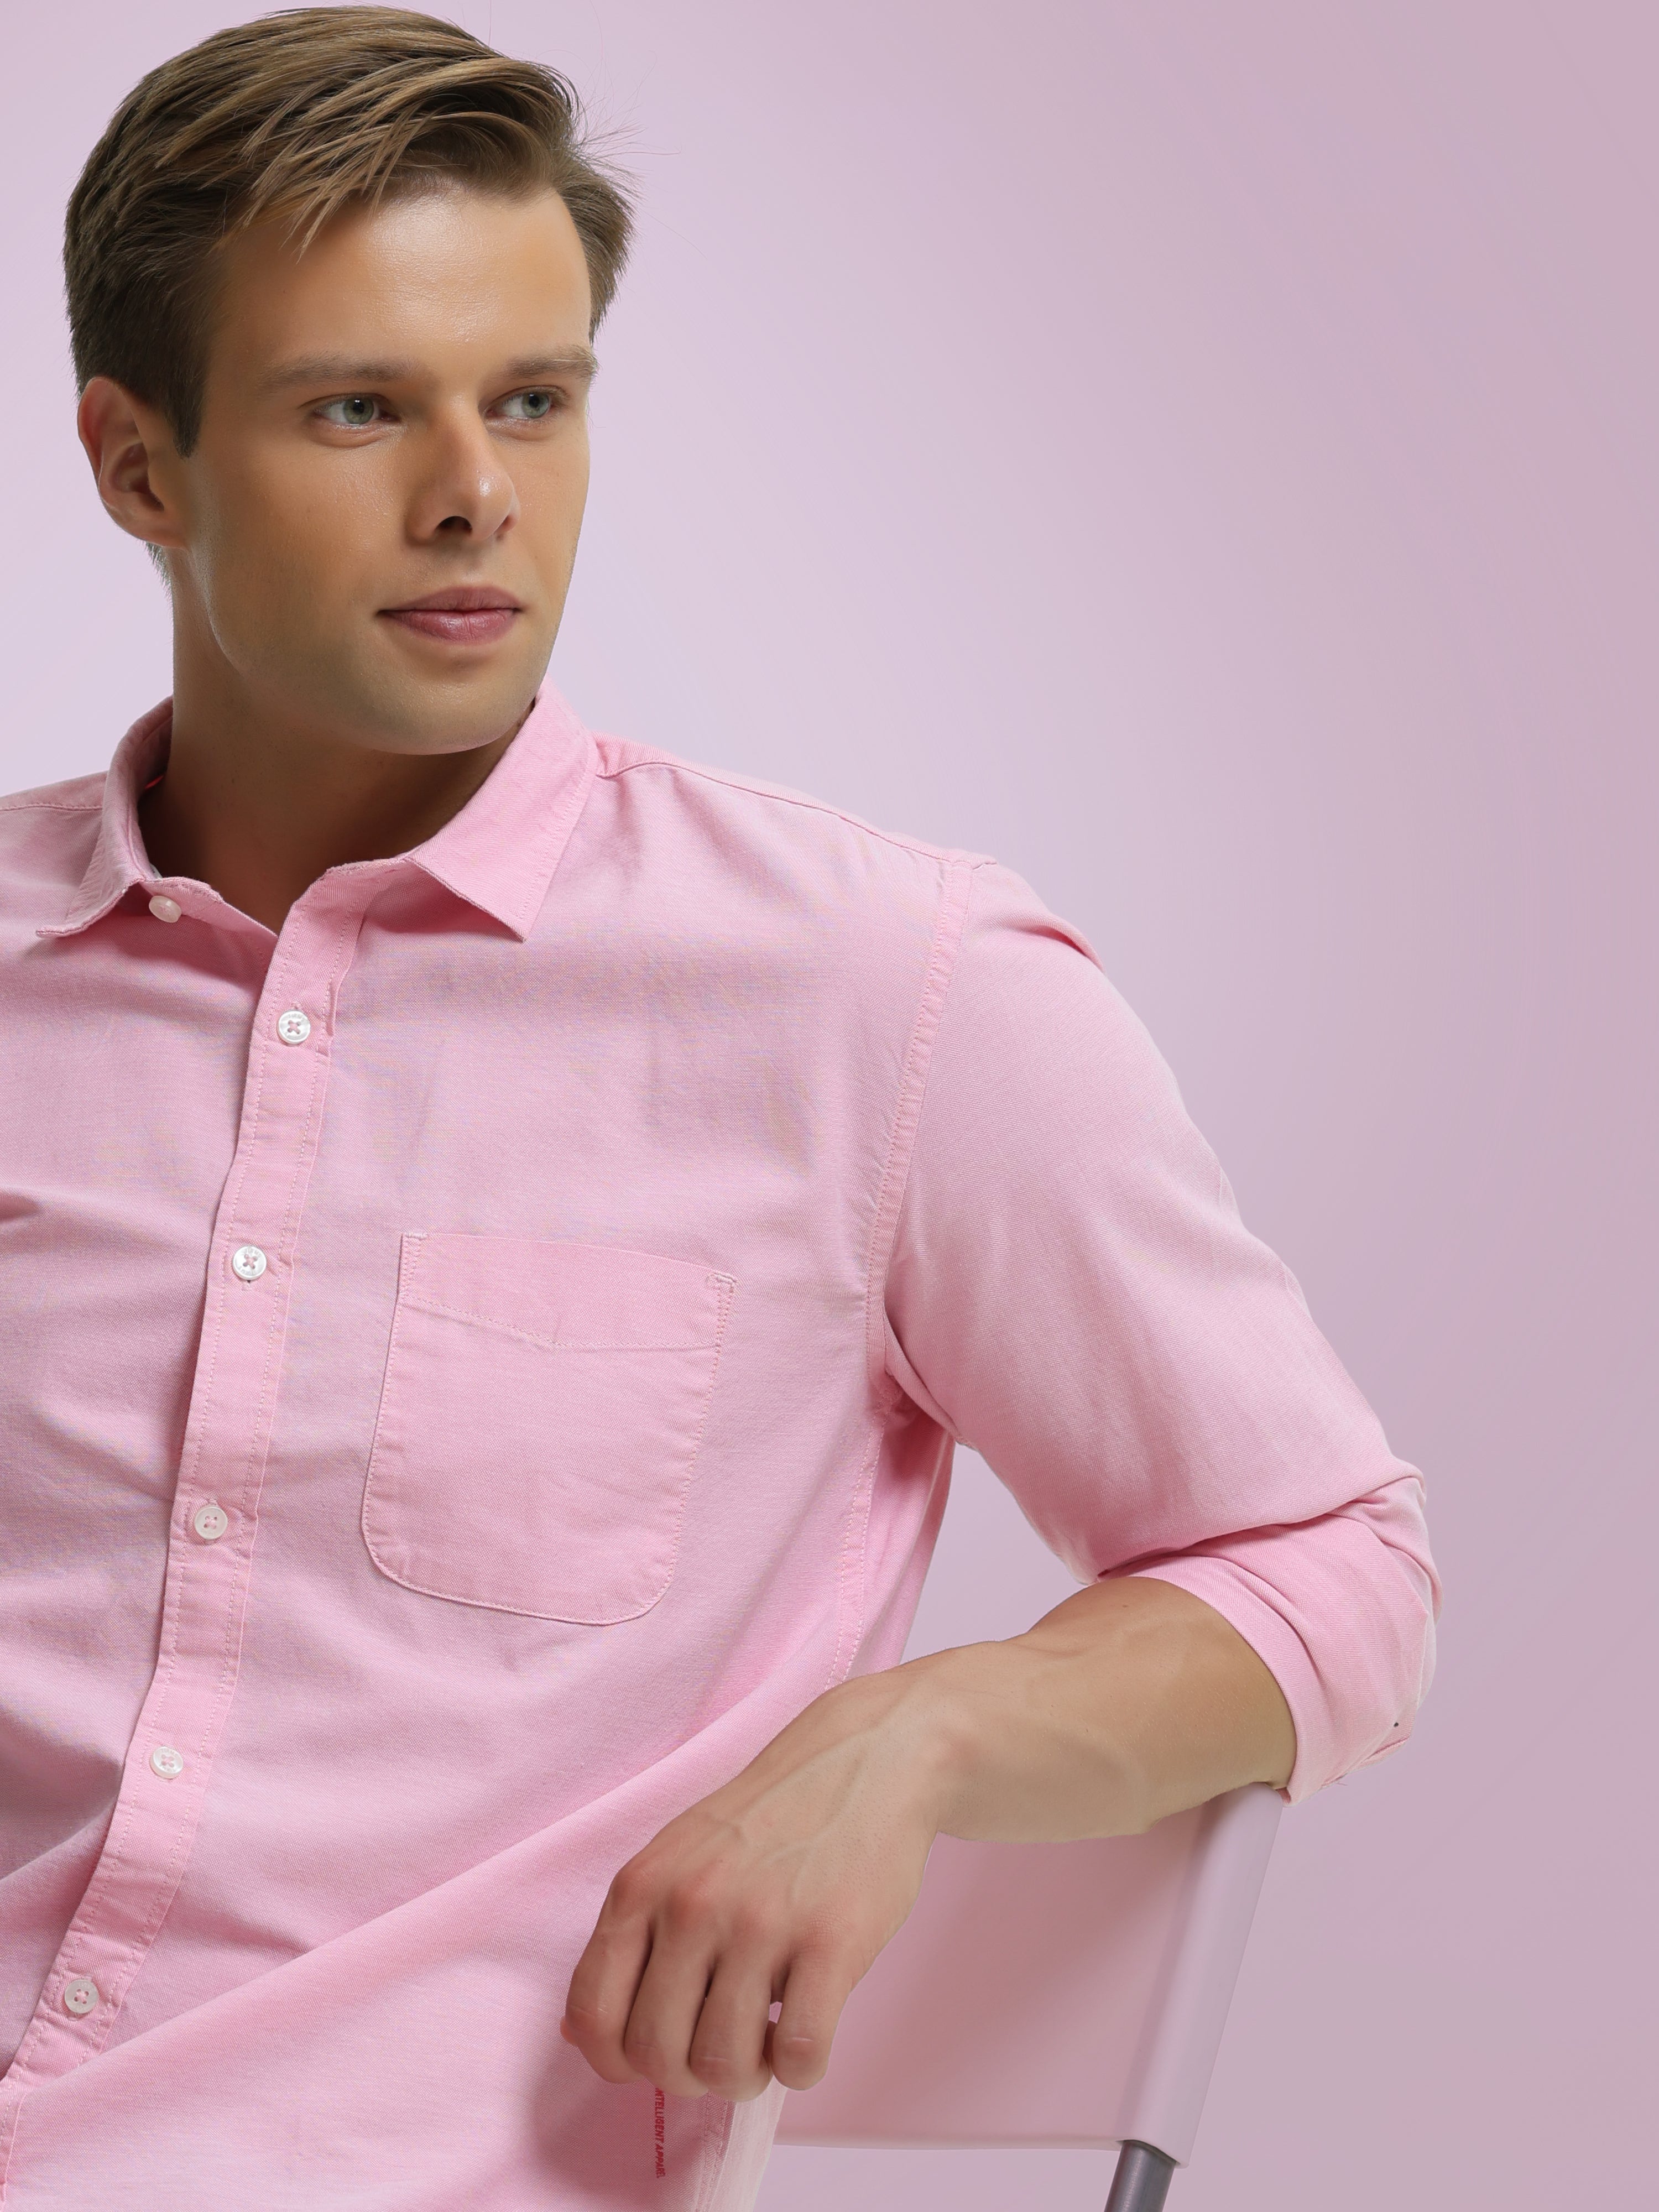 Turms Flamingo Pink Men's Shirt - Intelligent Apparel